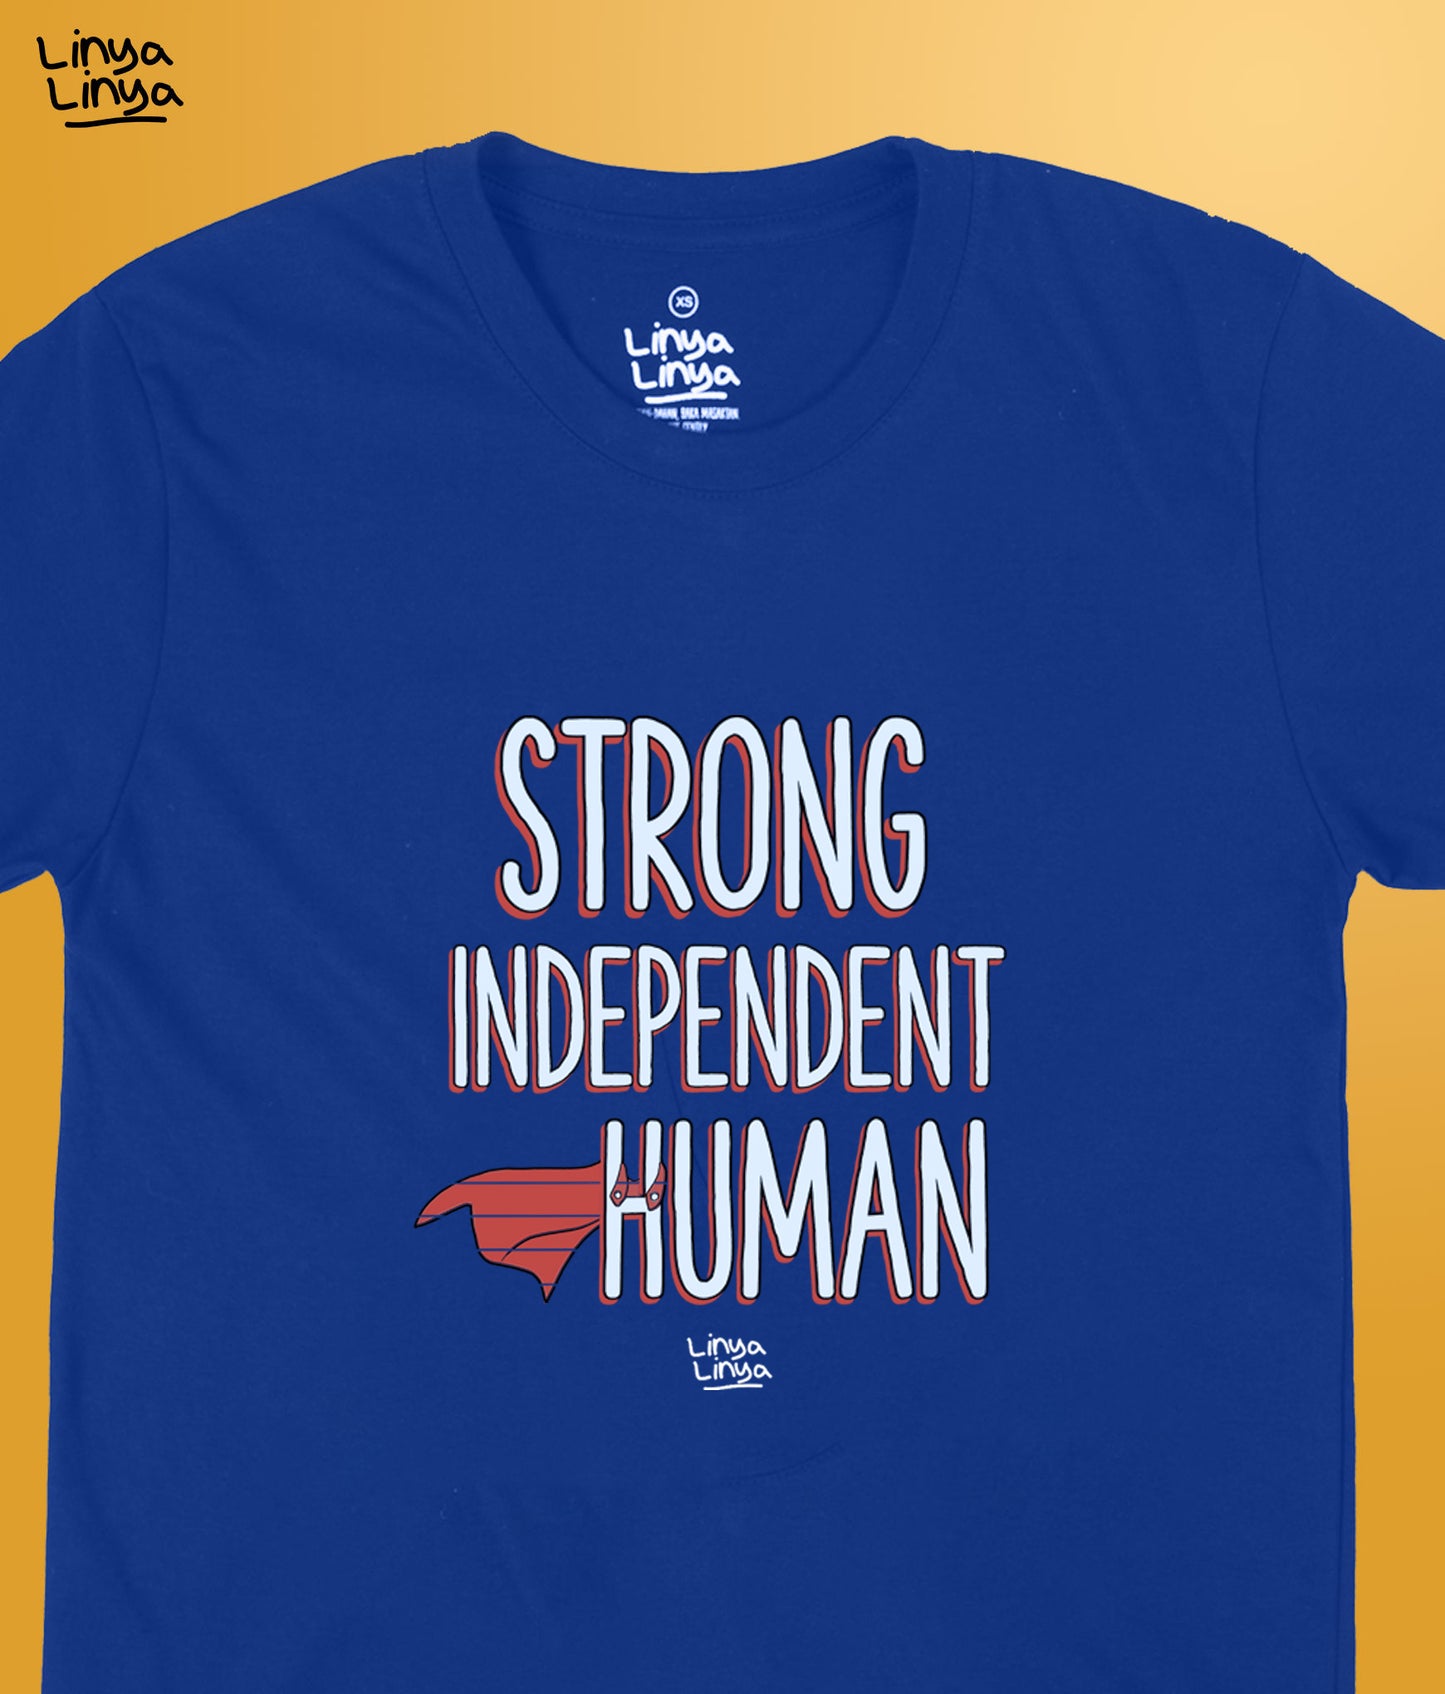 Strong Independent Human (A. Blue)